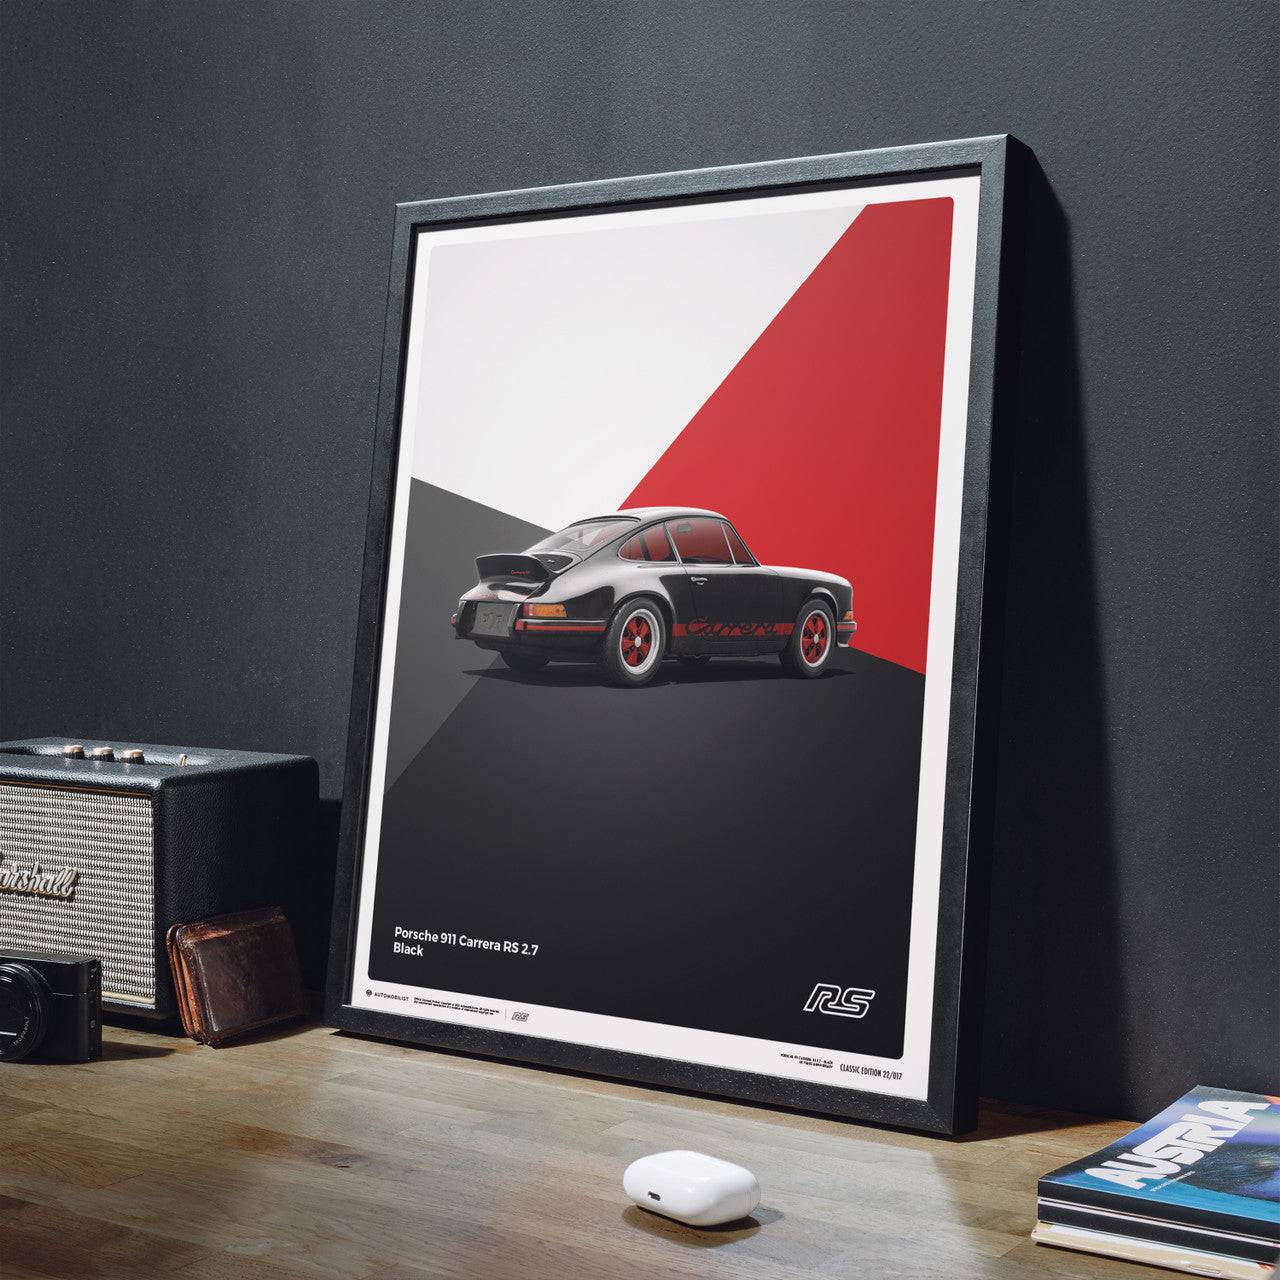 Porsche 911 RS - Black - Limited Poster